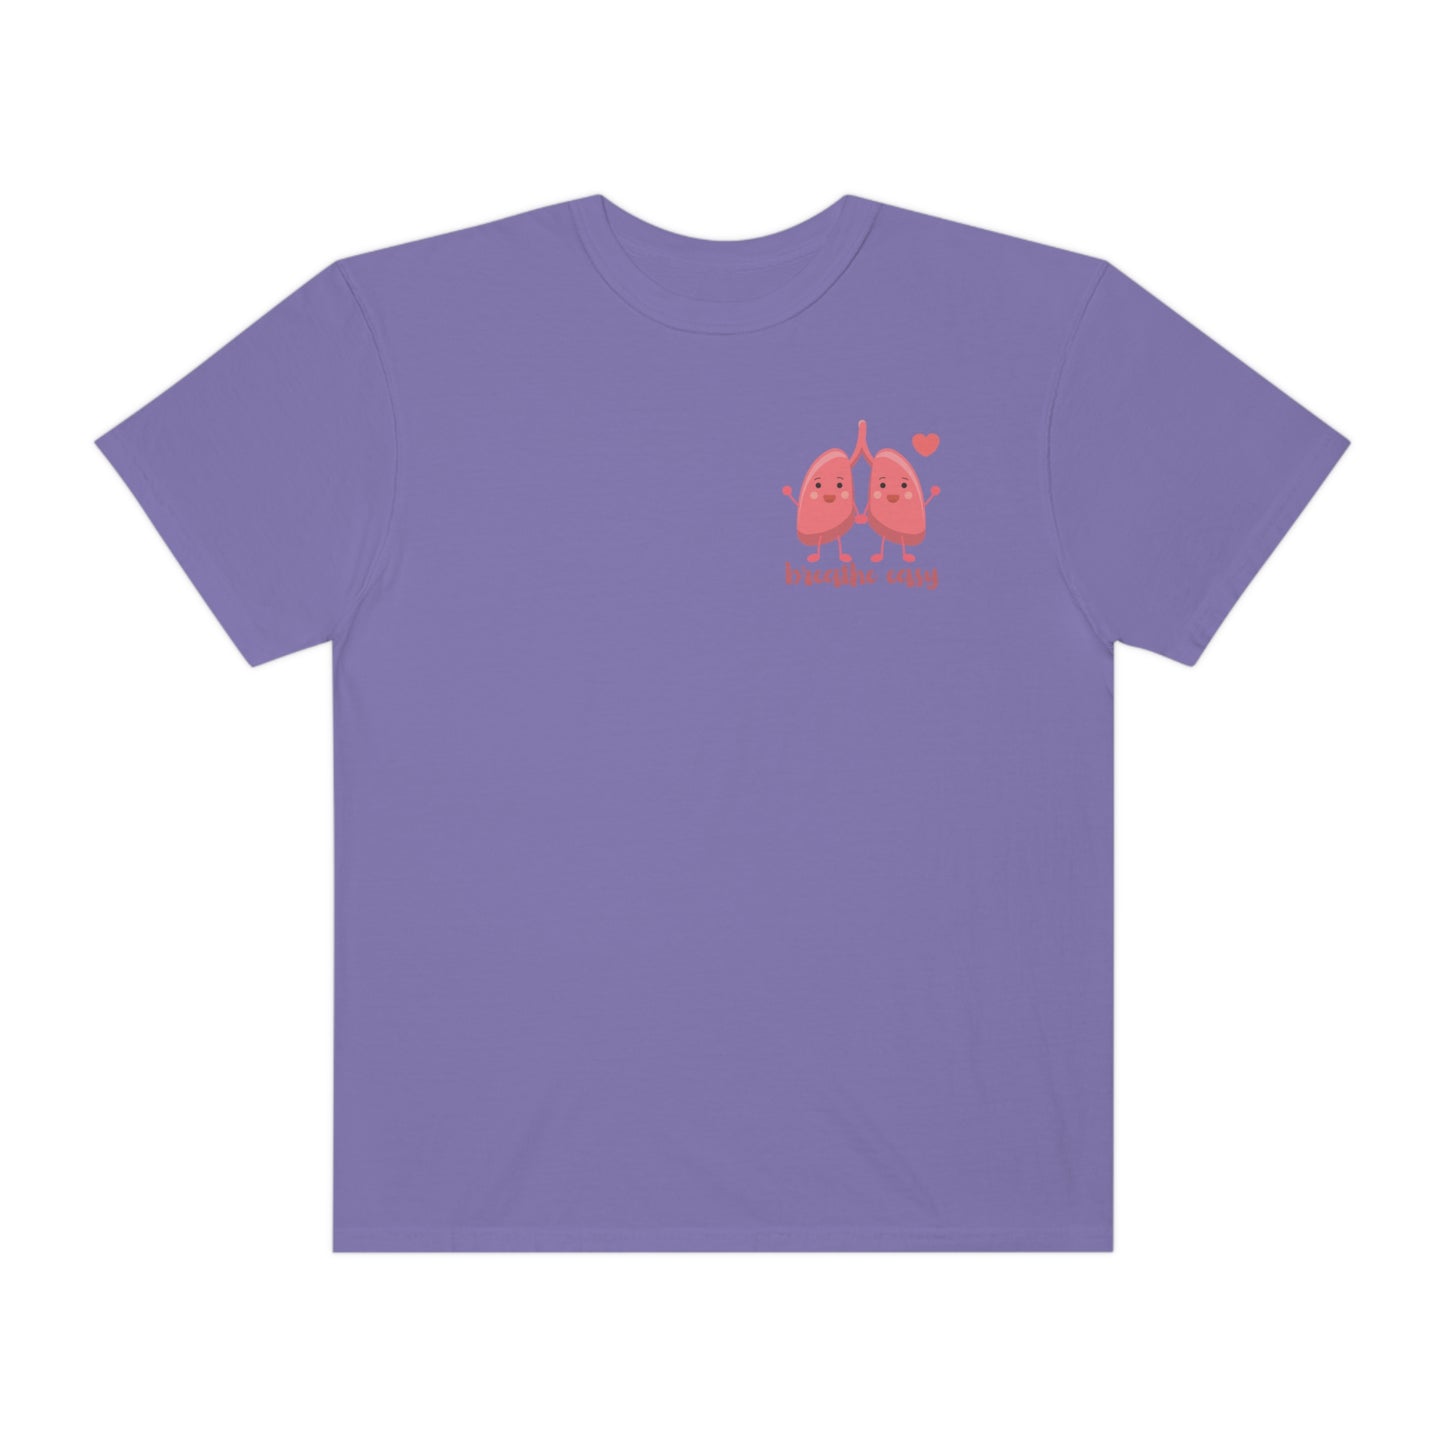 Breathe Easy Respiratory T-Shirt, Nurse Tee, Pulmonary Shirt, Gift for Respiratory Therapist, Gift for Doctor, Nurse Gift,